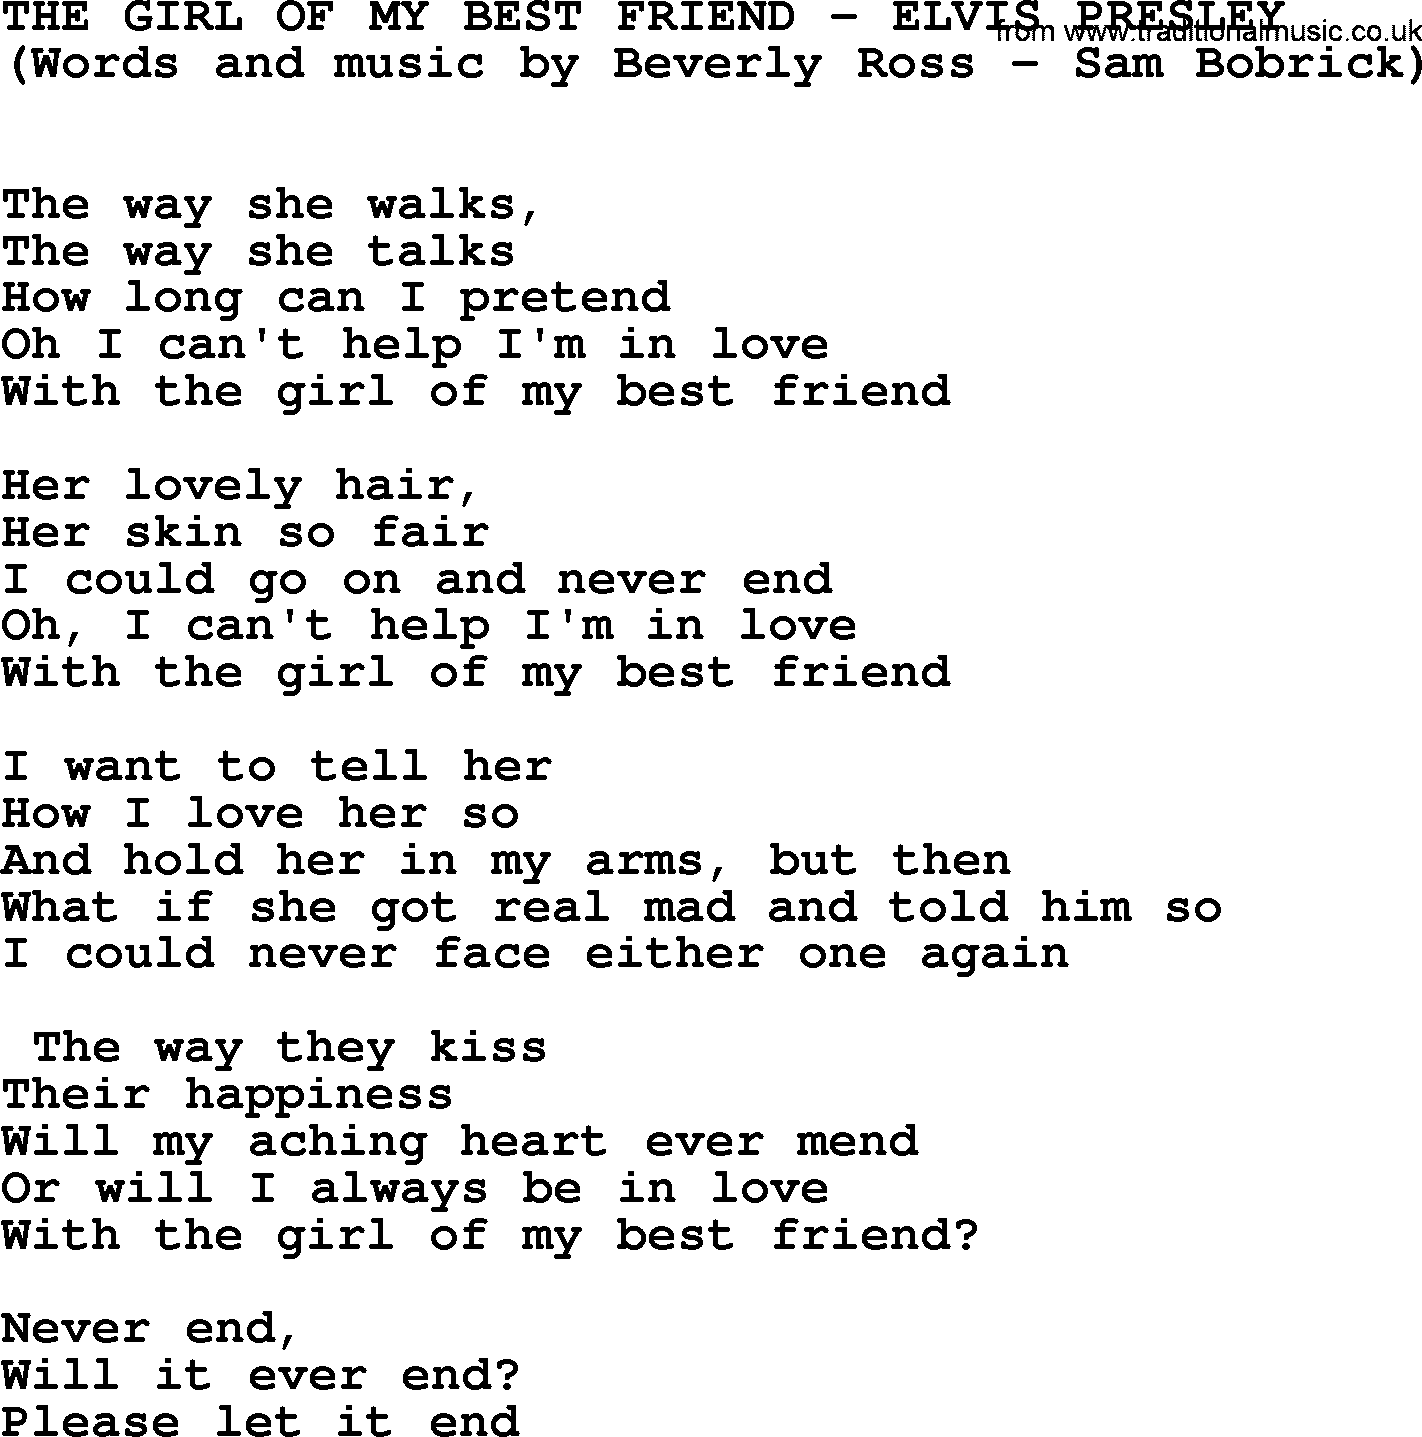 Elvis Presley song: The Girl Of My Best Friend lyrics